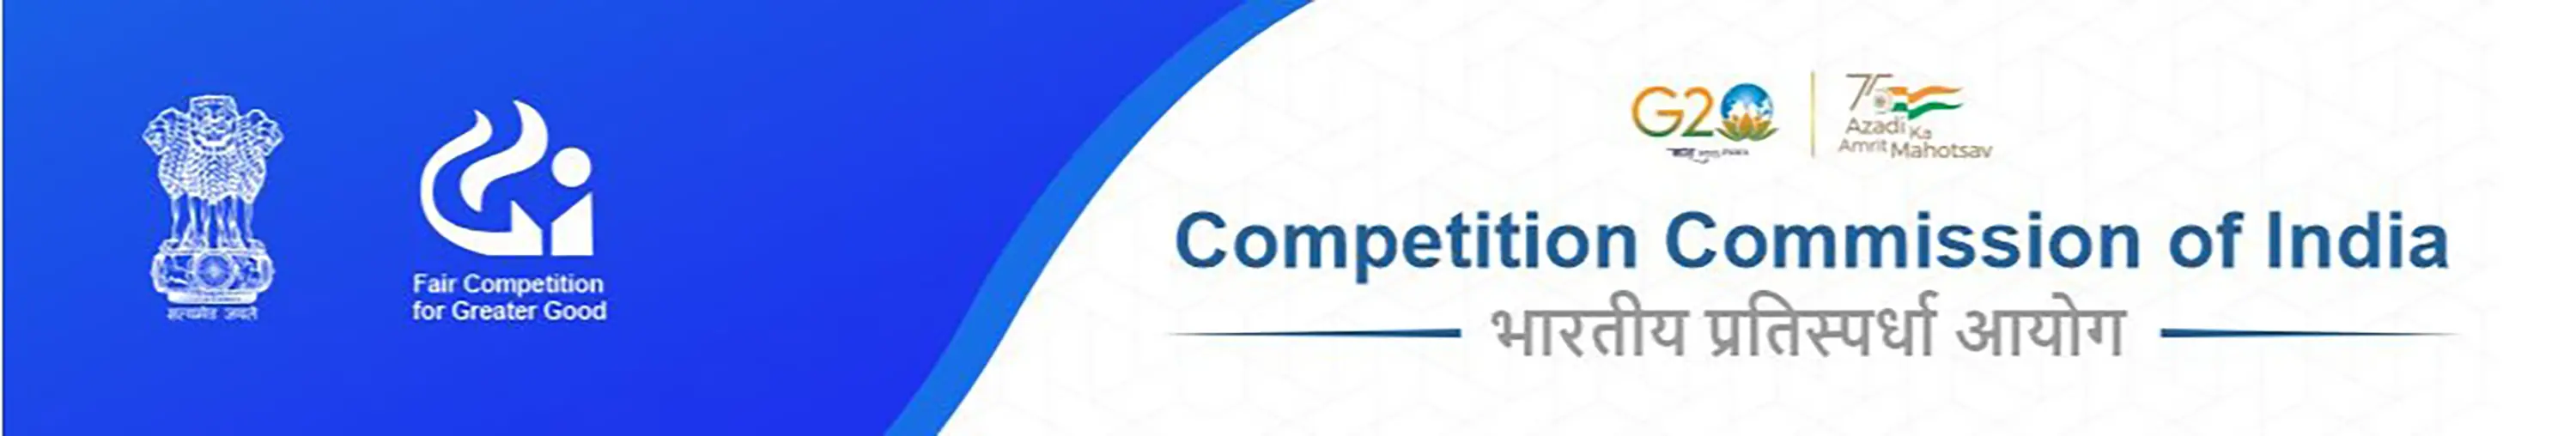 Competition Commission of India internship Program